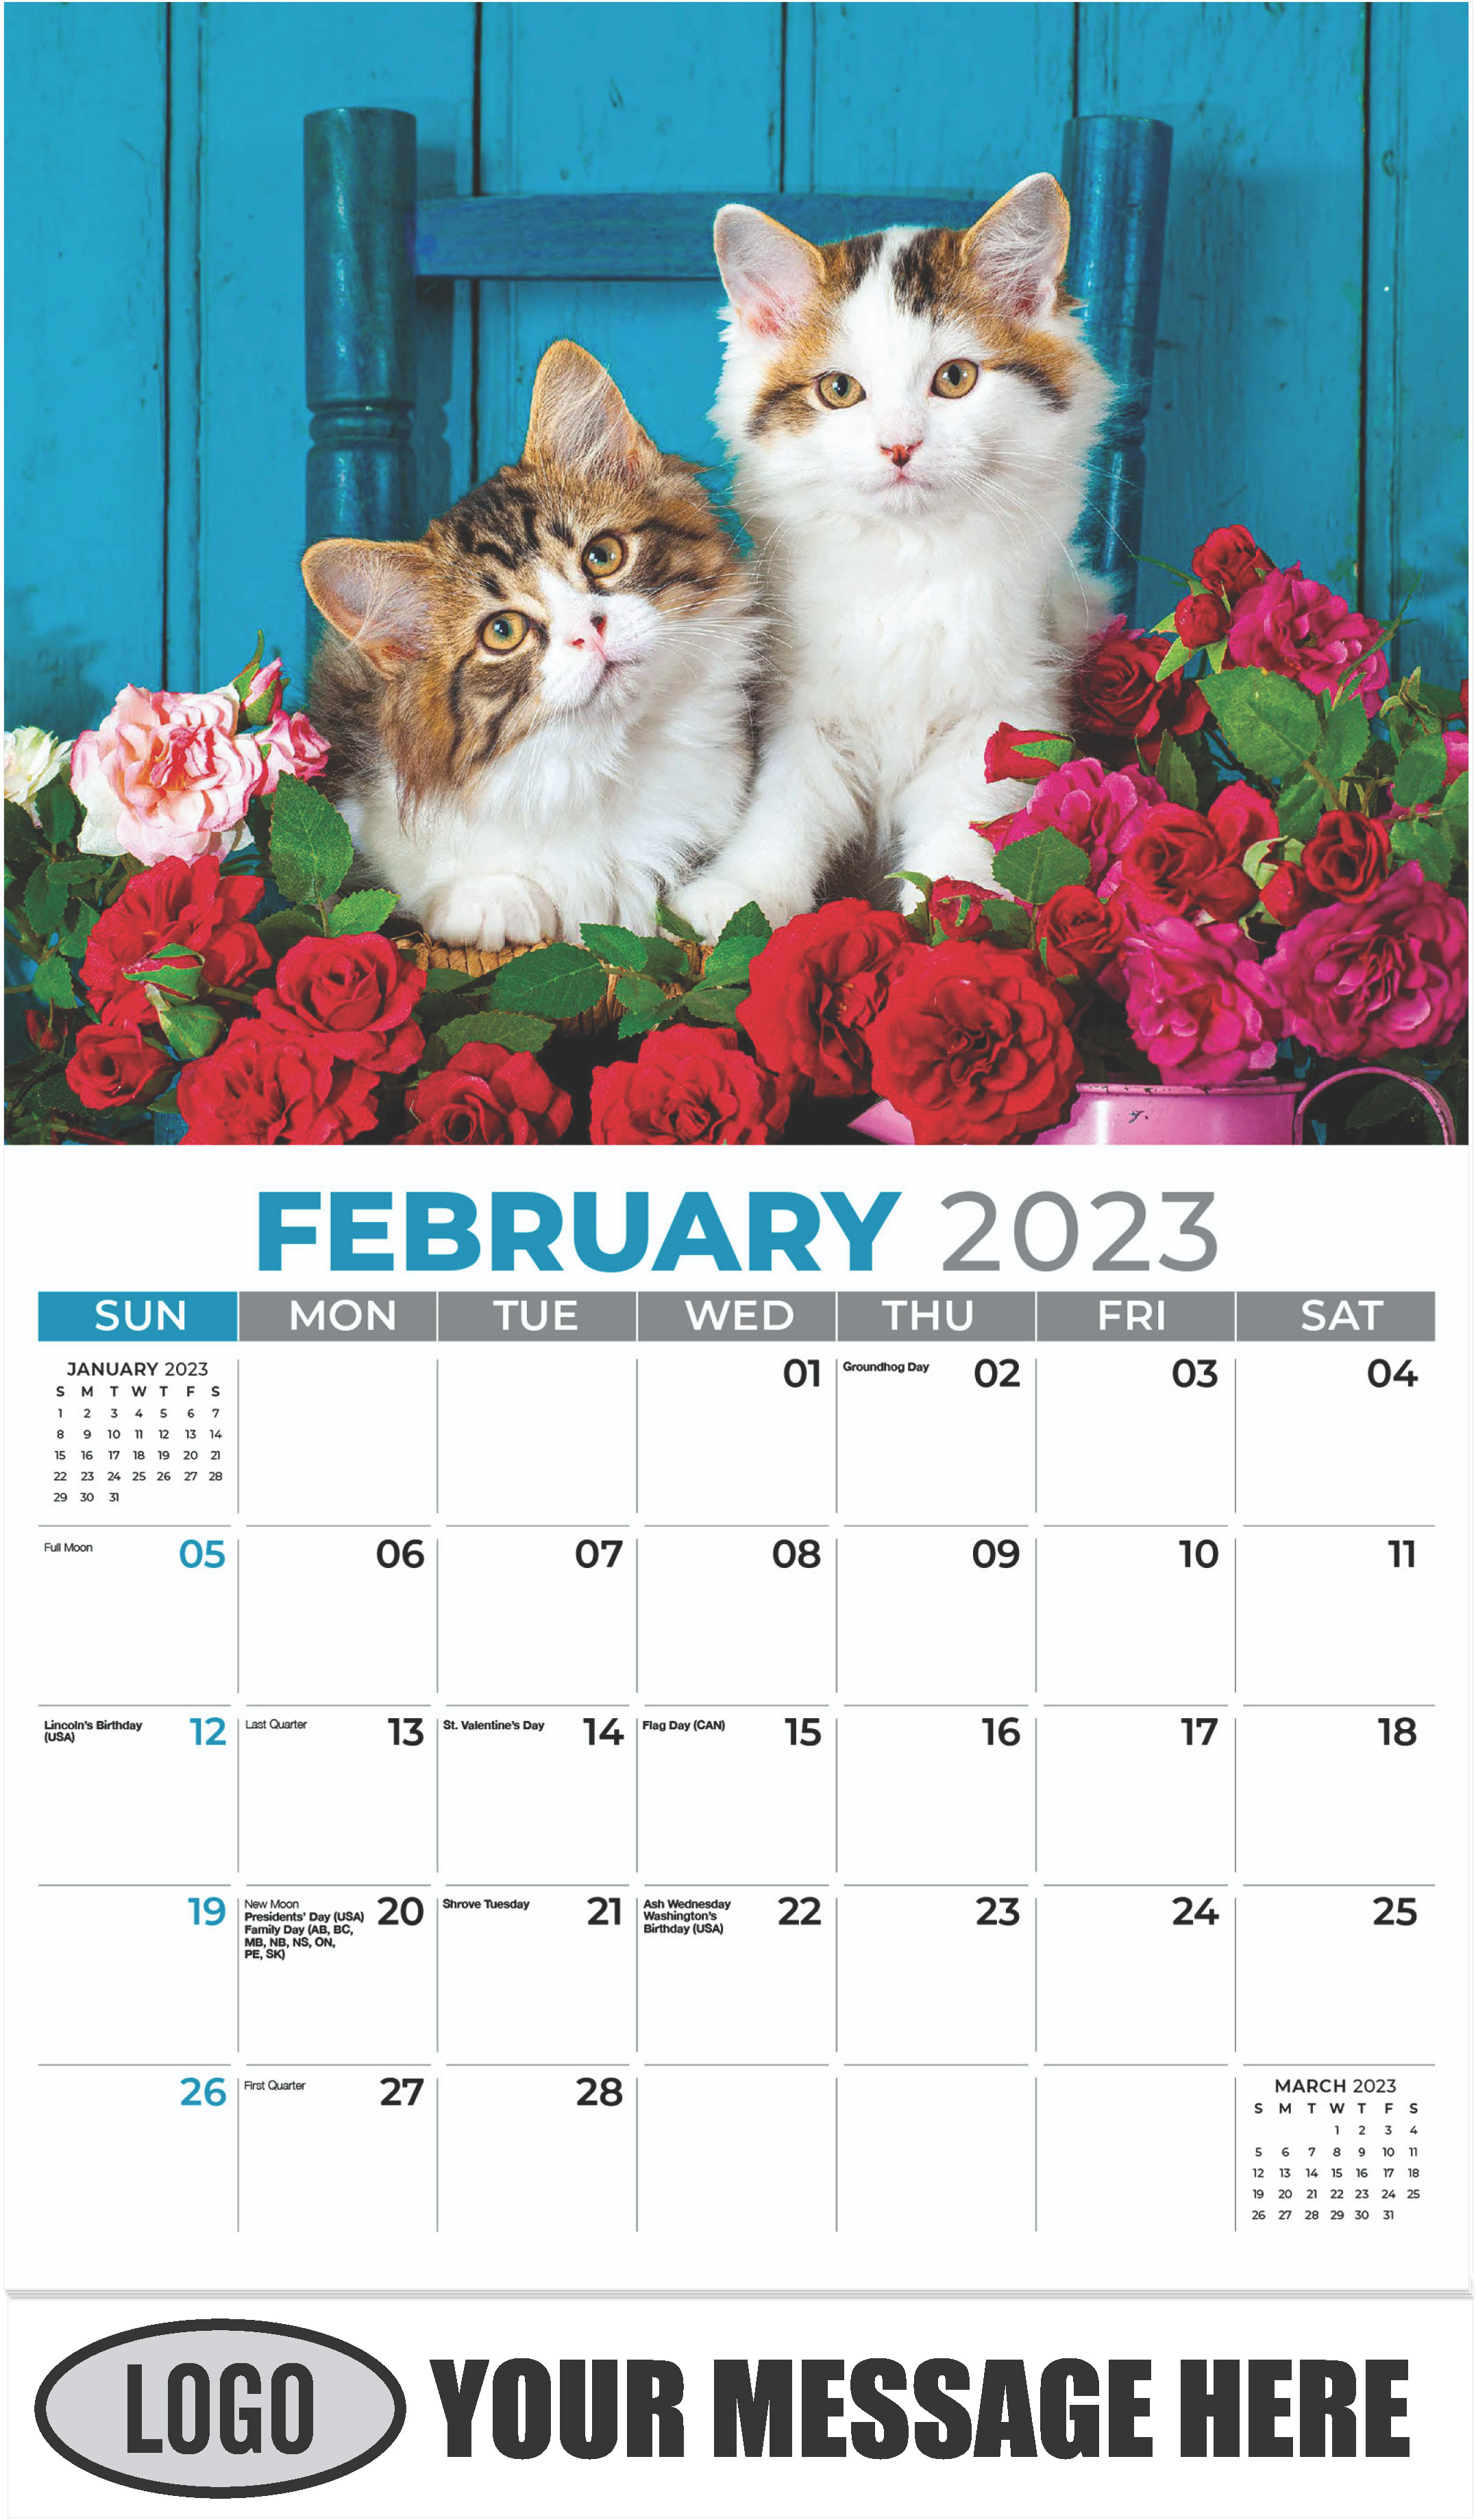 Domestic Cat - February - Kittens 2023 Promotional Calendar